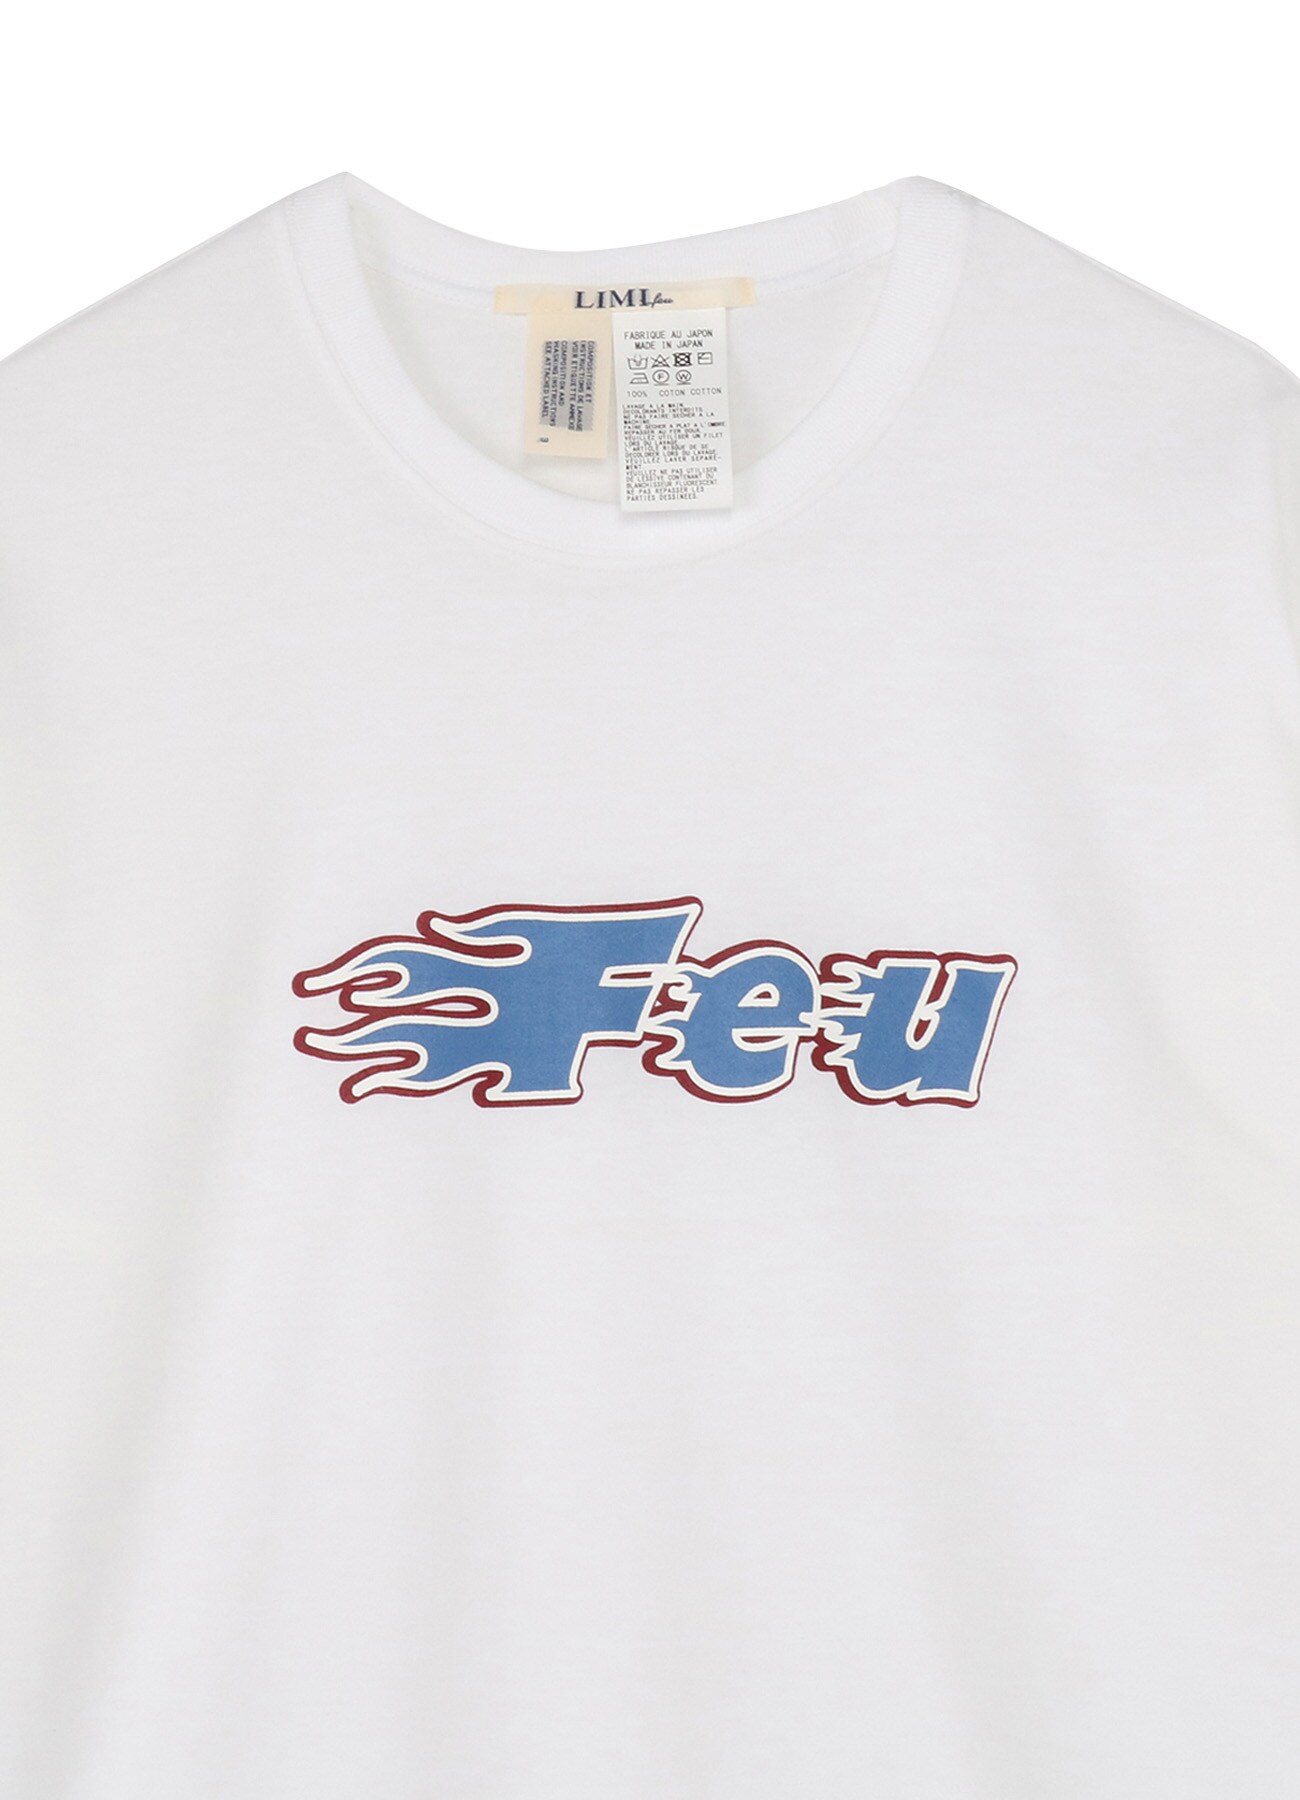 20/-Plain Stitch Feu Print T-Shirt A